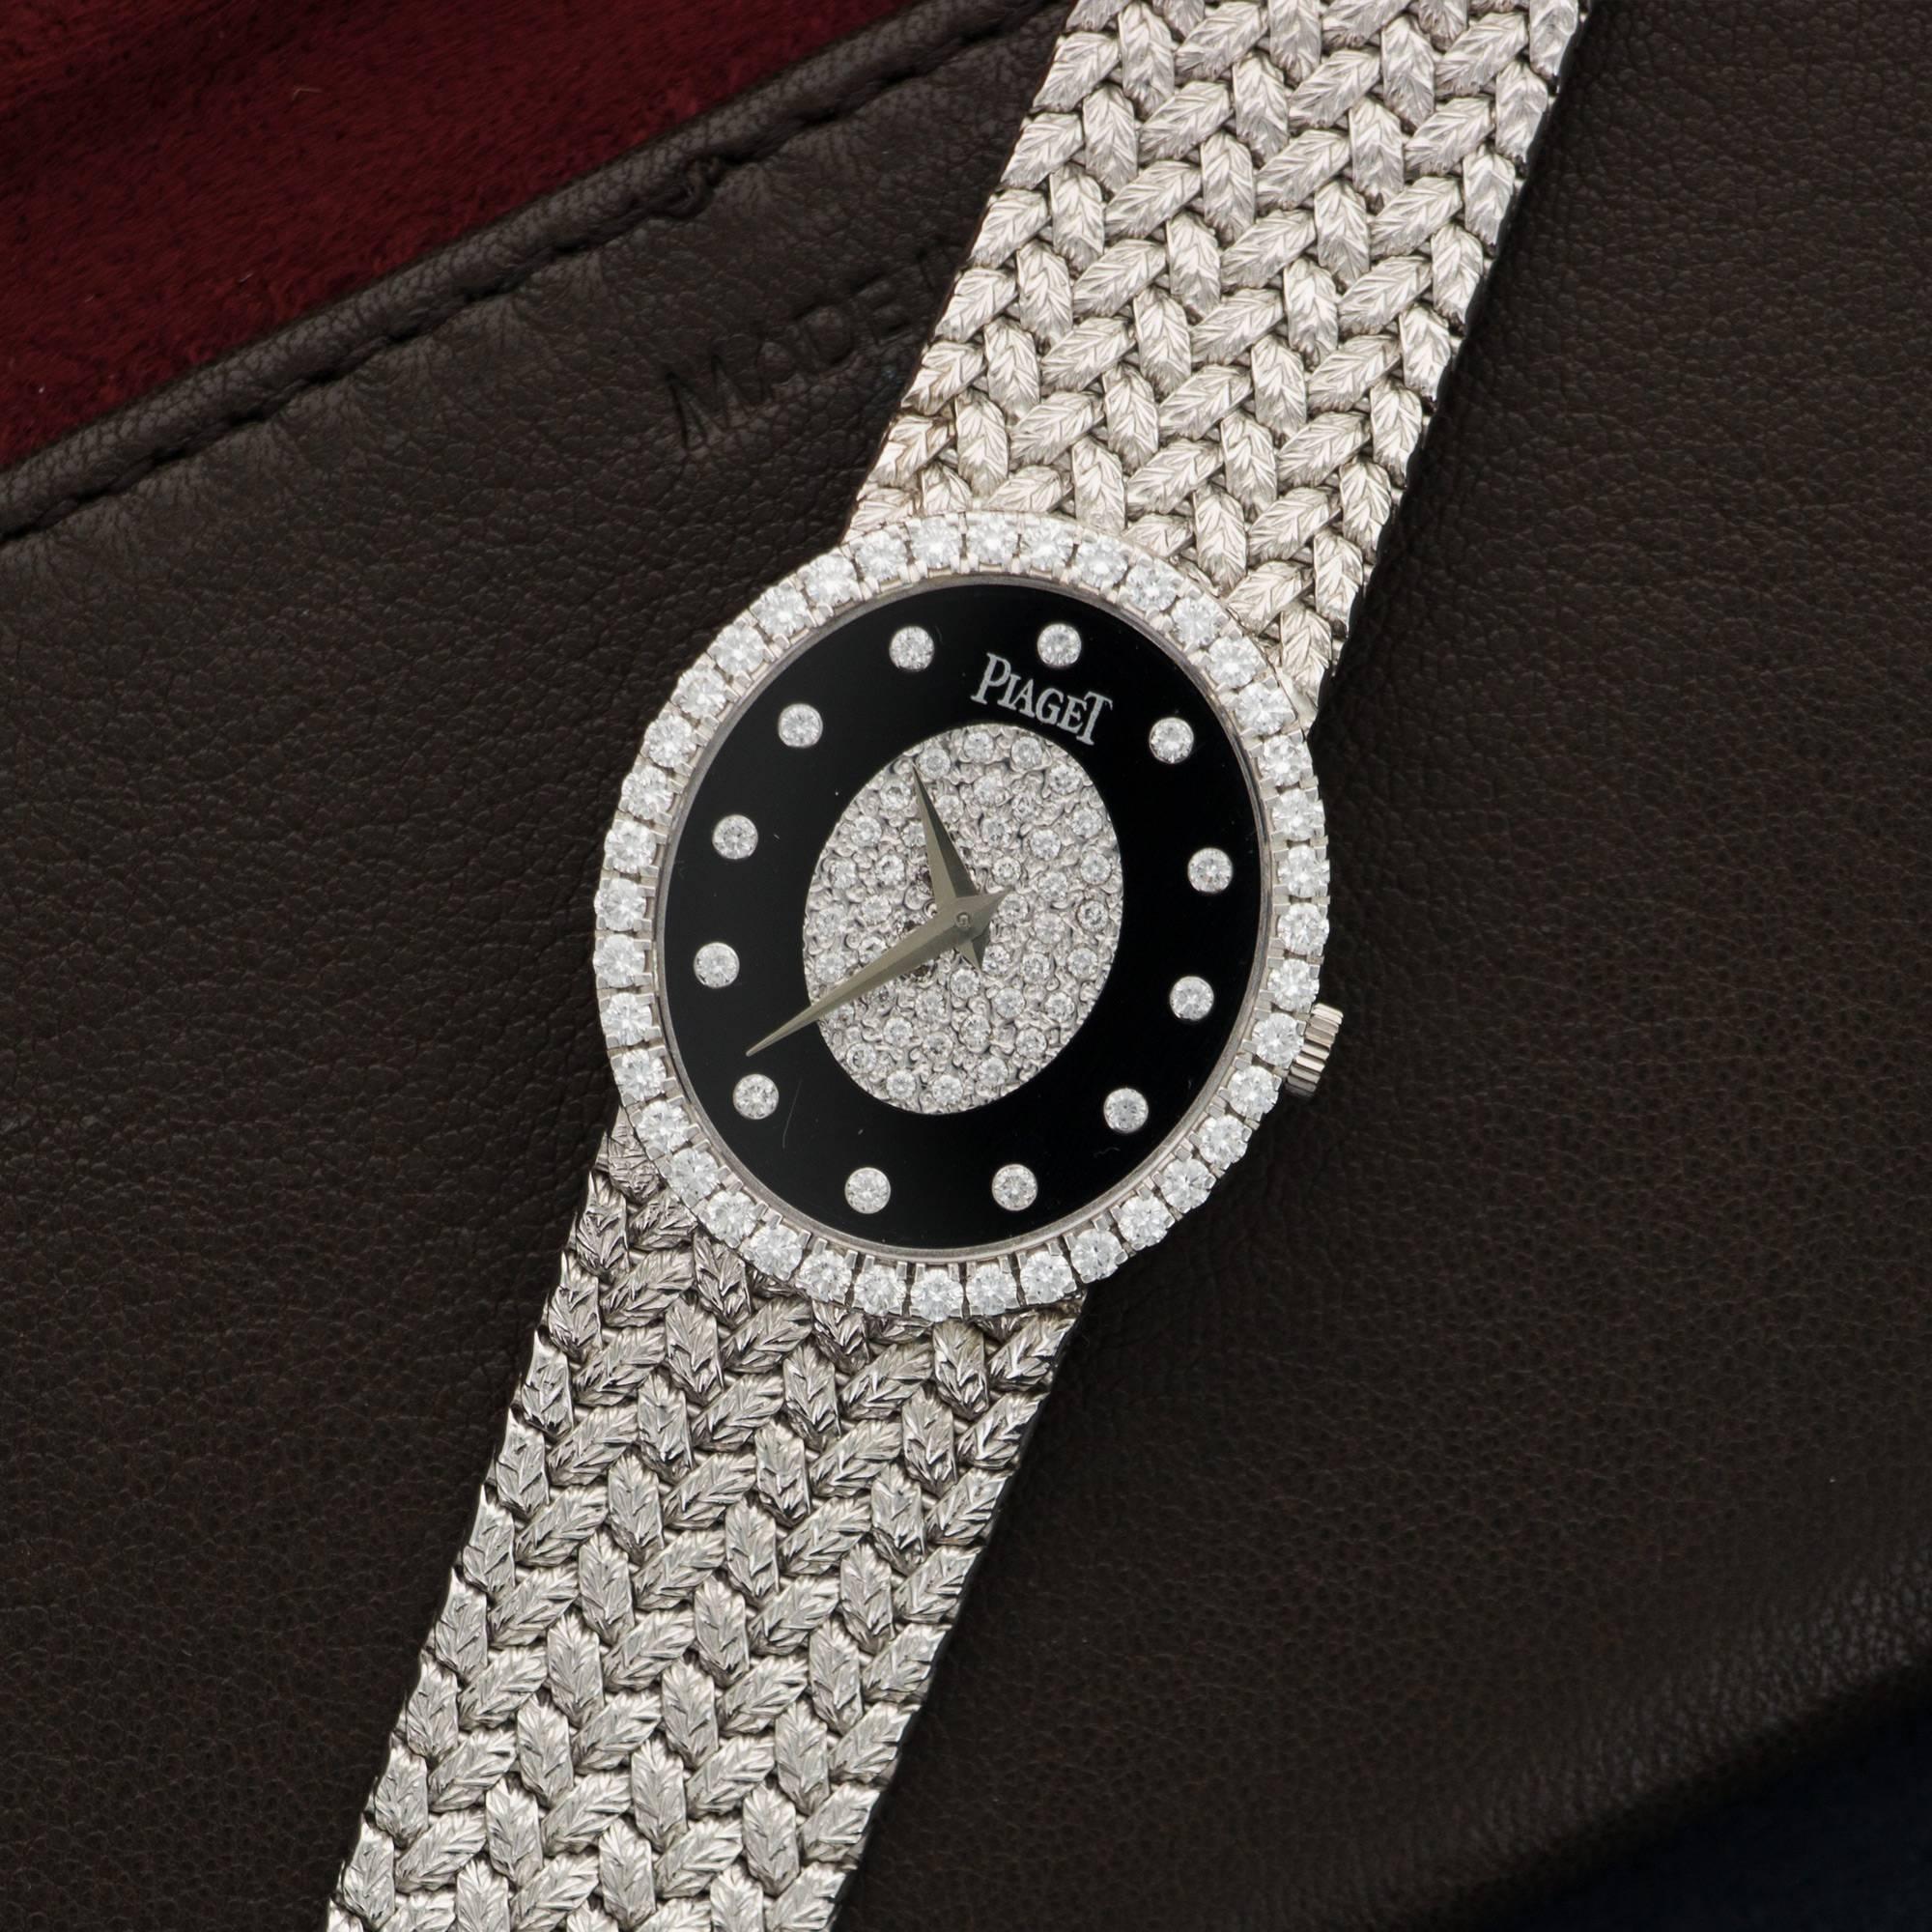 An 18k White Gold Pave Diamond & Onyx Bracelet Watch. Model 9826. Circa 1970's. Mechanical Wind. Case size 24.2mm X 27.2mm. 